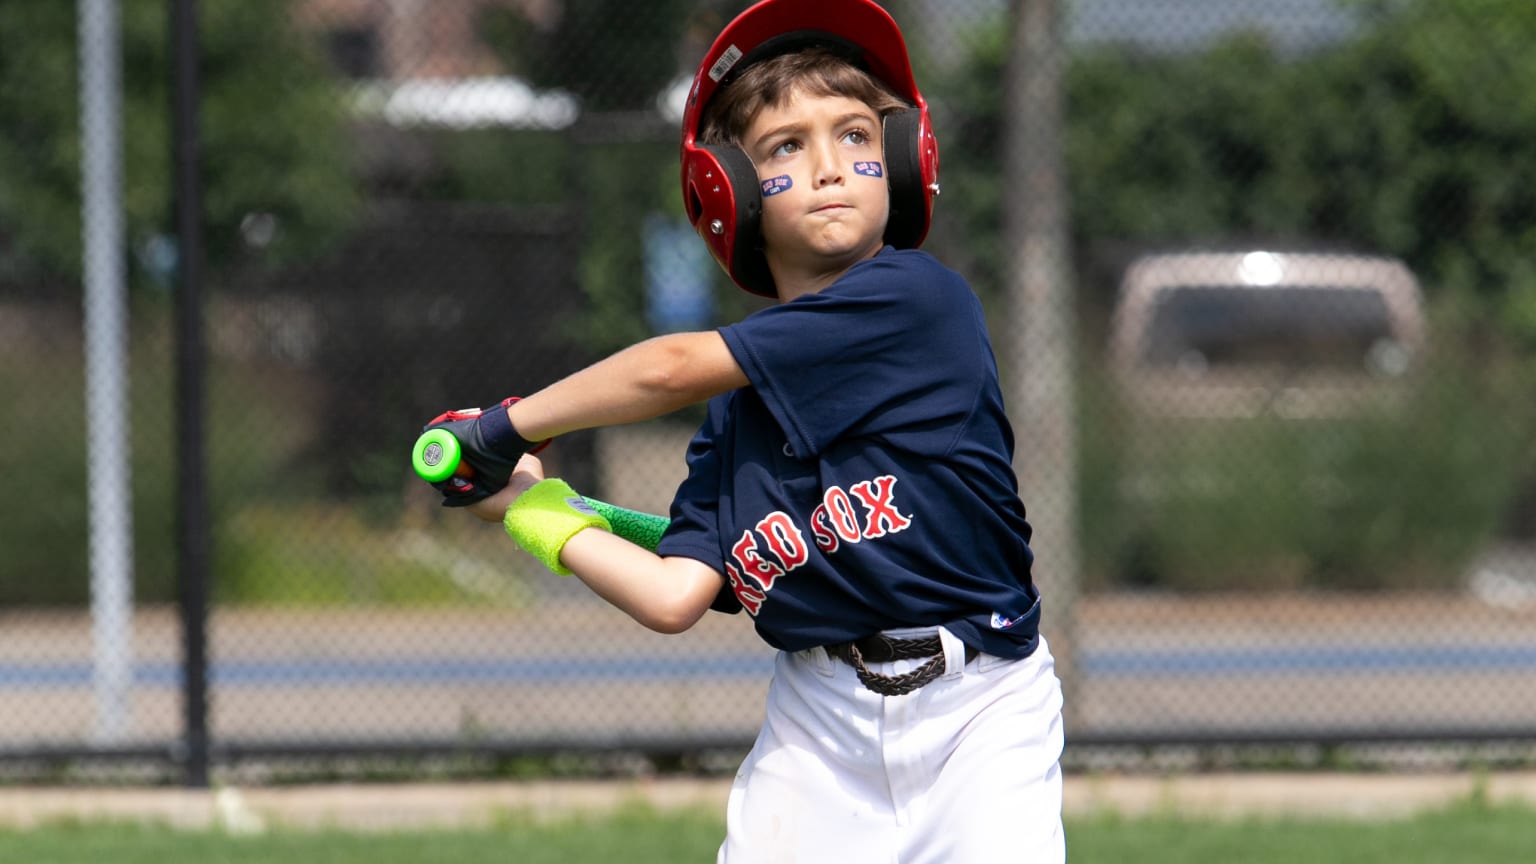 Red Sox Kids Jerseys